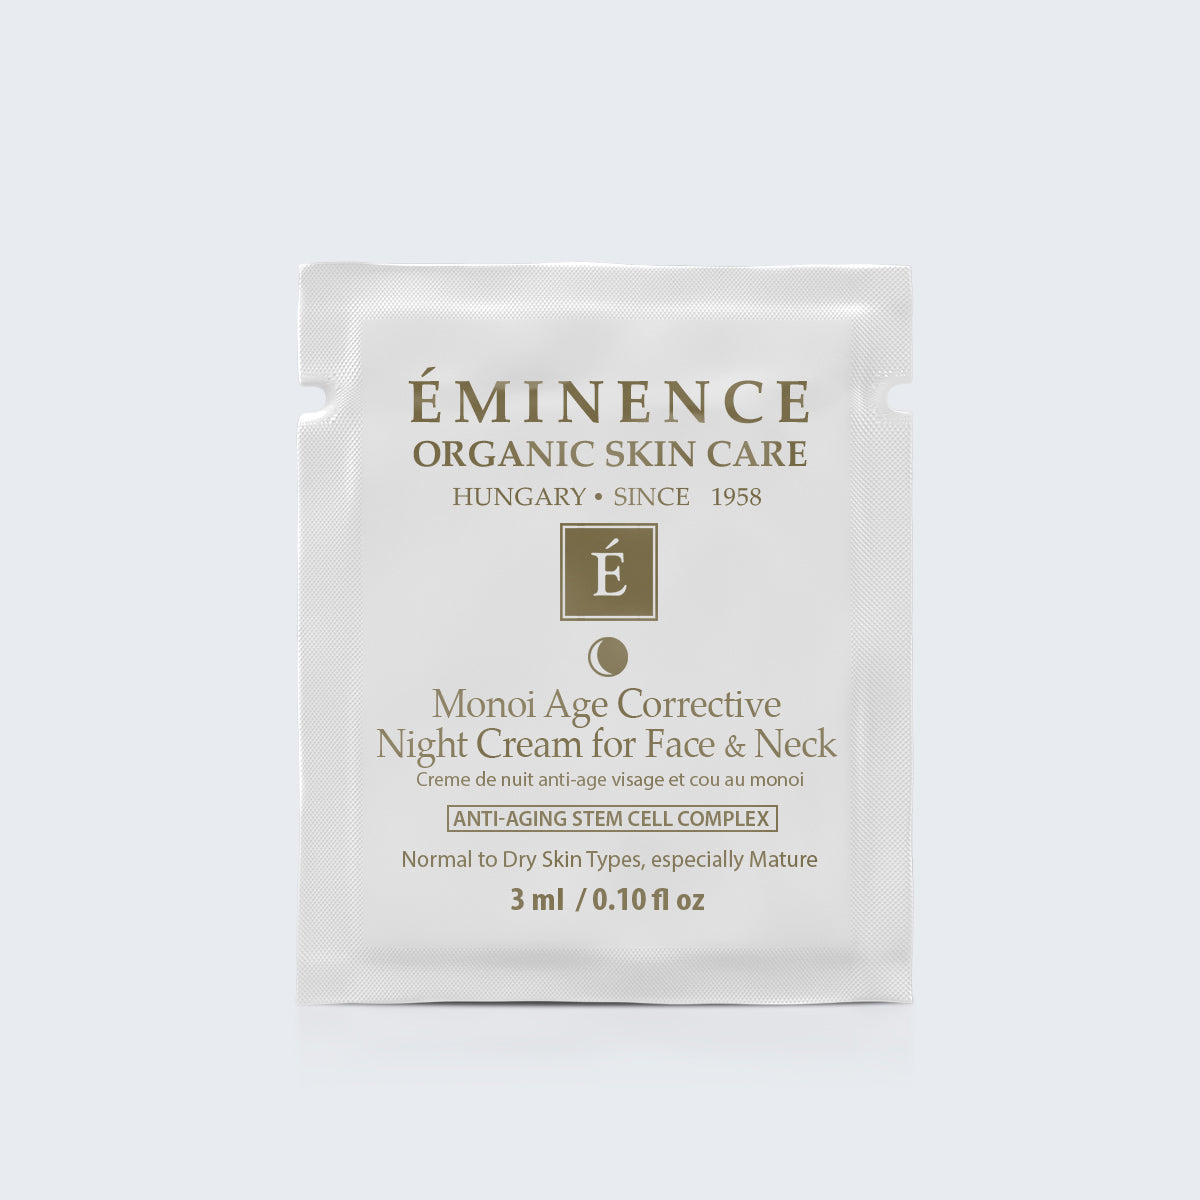 Eminence Organics Monoi Age Corrective Night Cream for Face & Neck  Card Sample